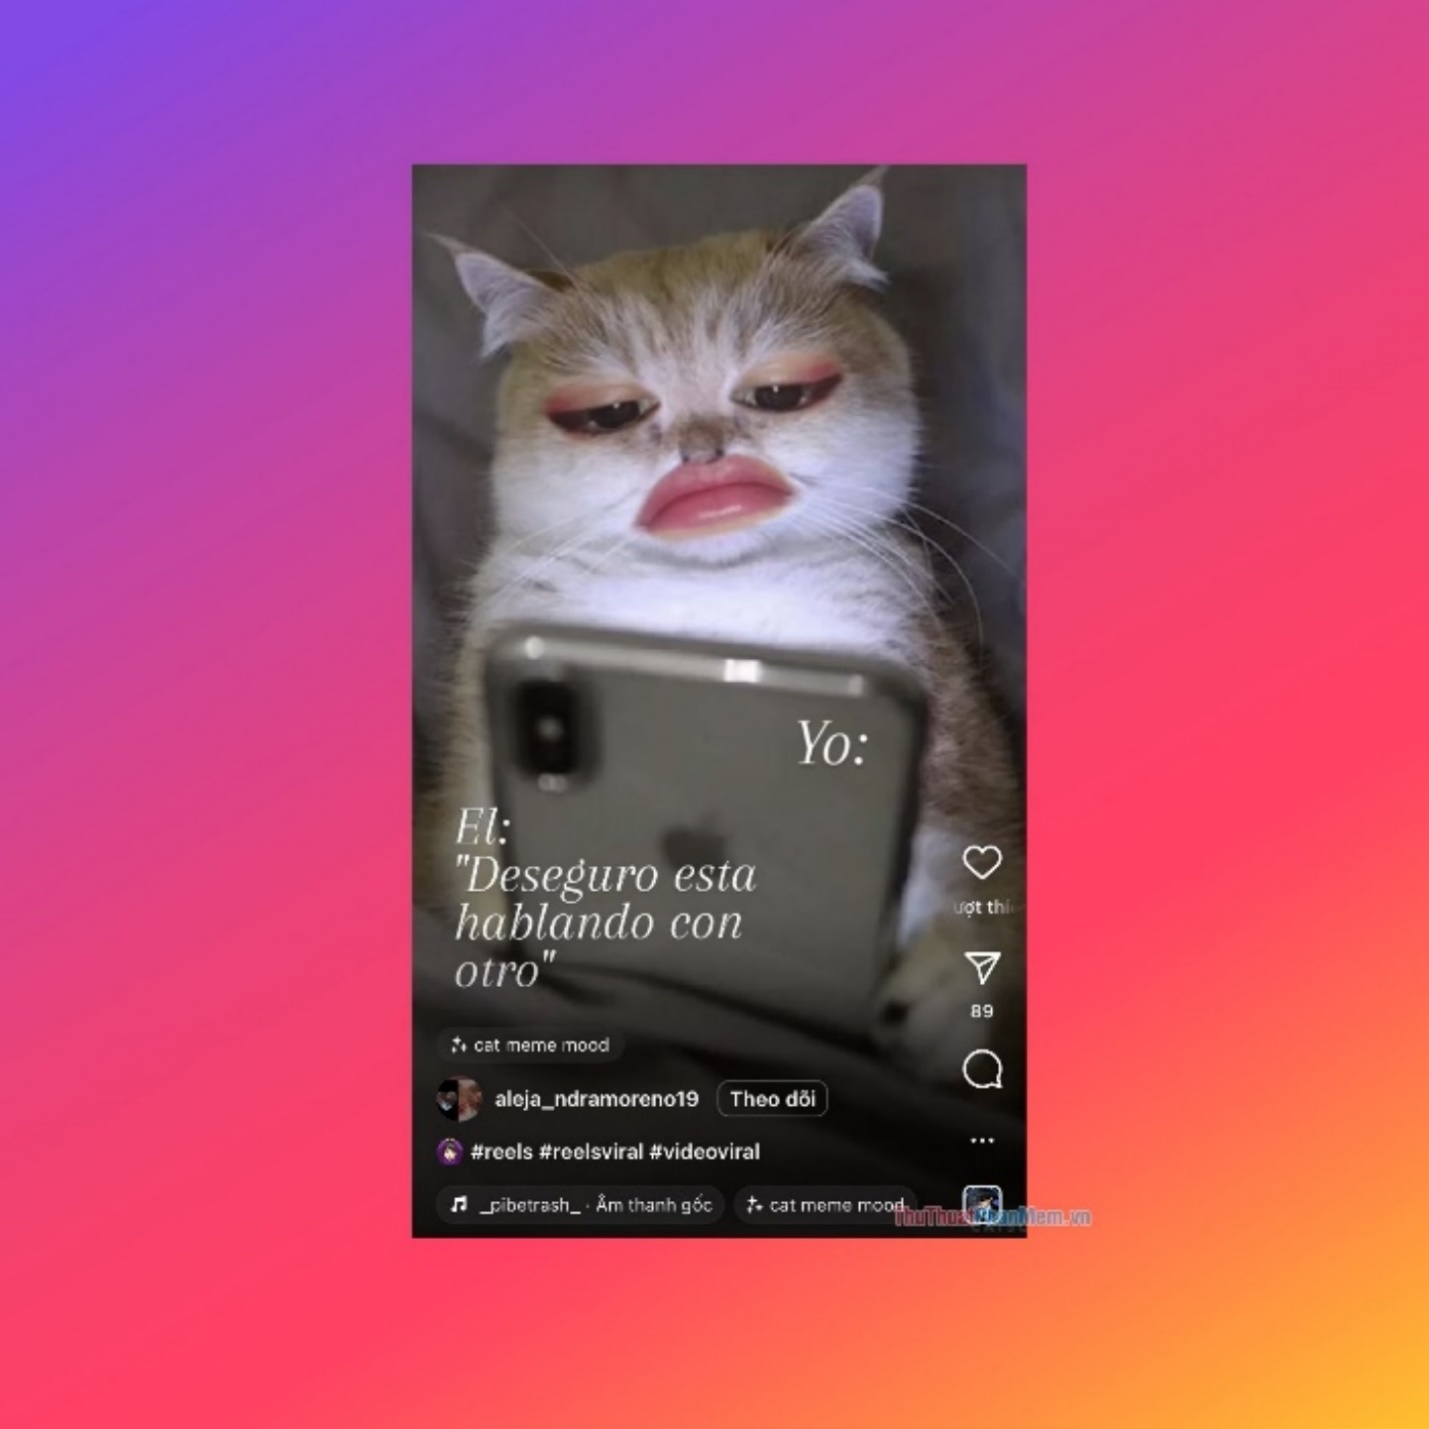 Cat Meme Mood – Filter ghép mặt vào mèo cầm iPhone